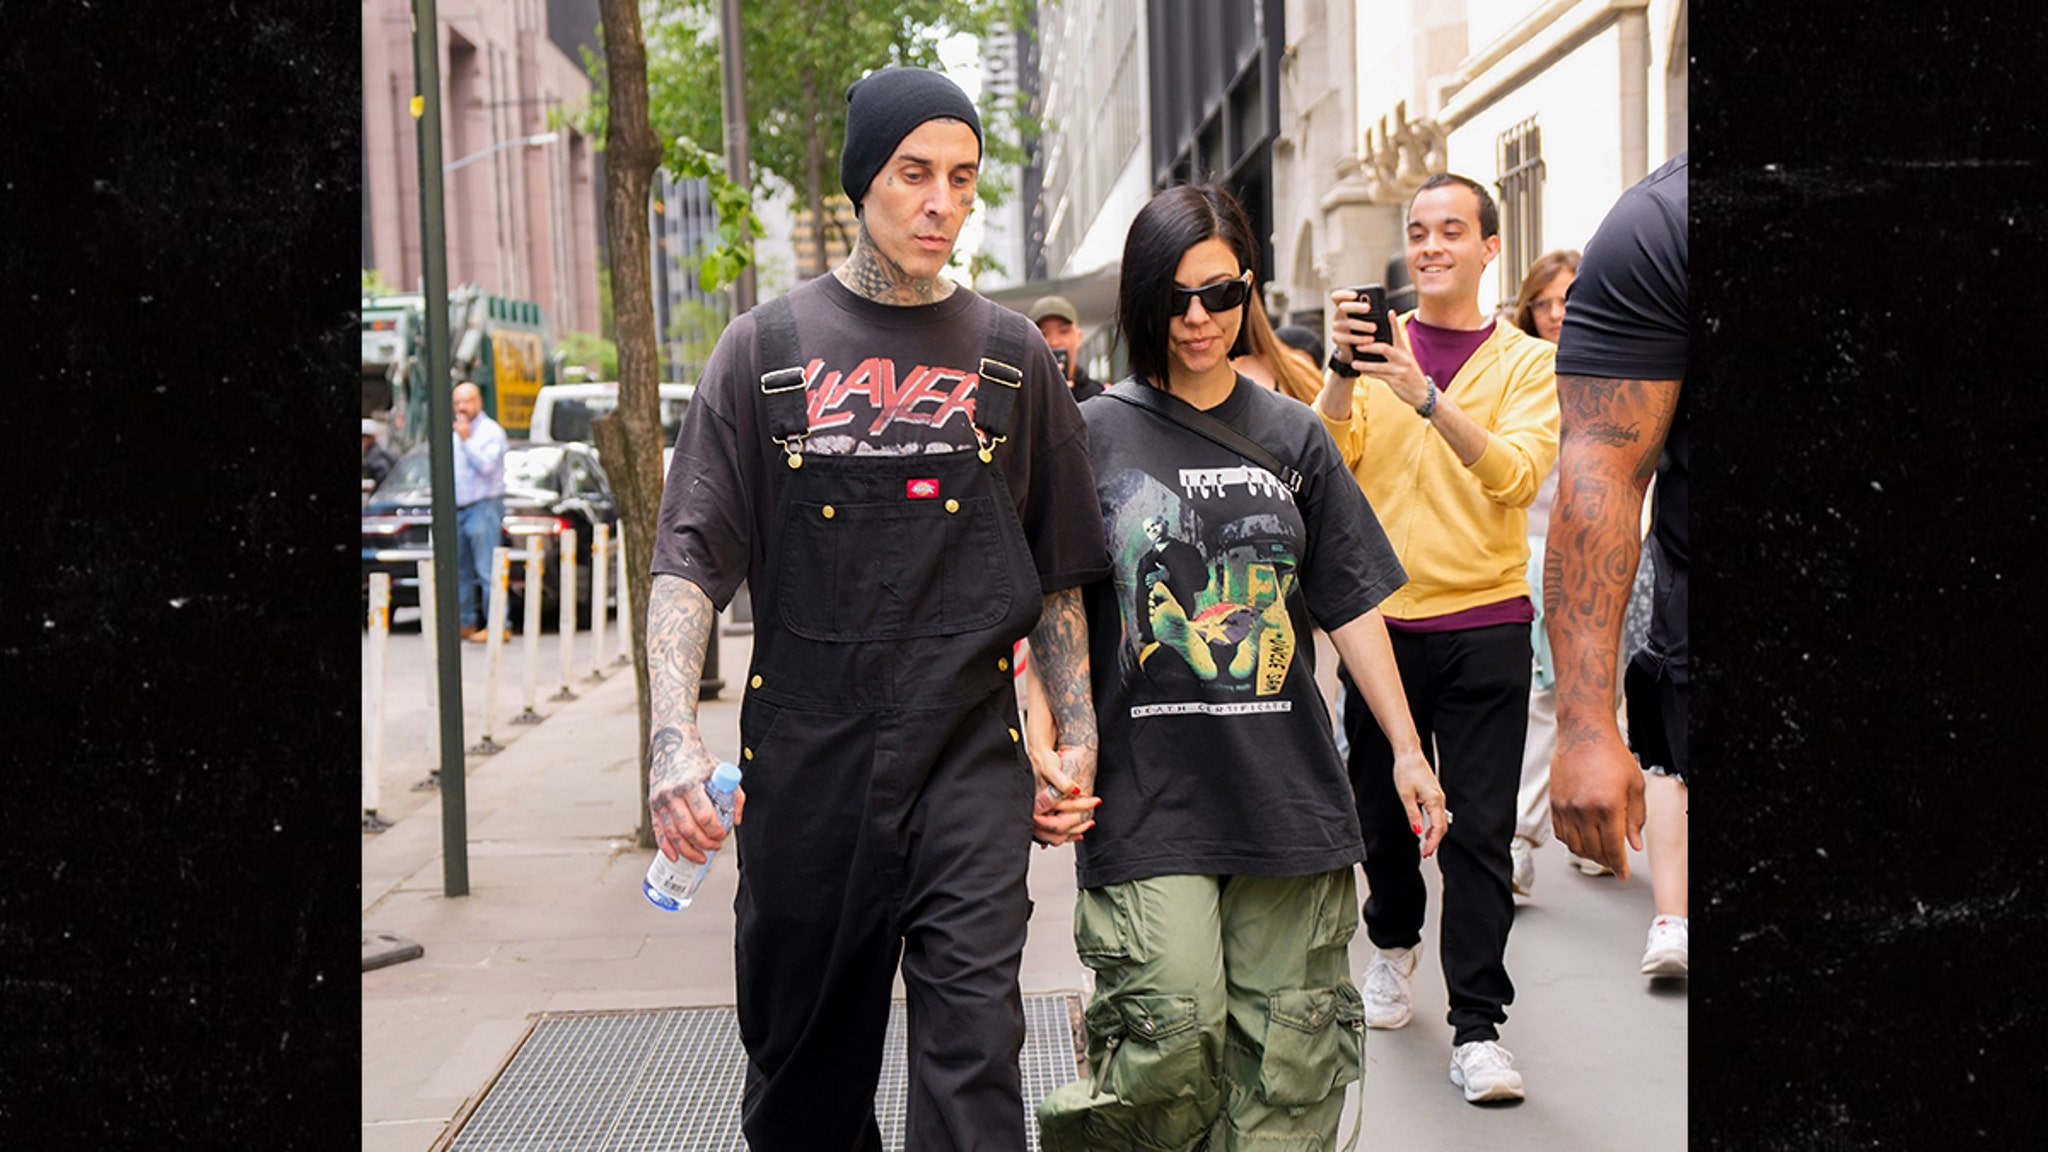 Kourtney Kardashian and Travis Barker in New York for Blink-182 Tour Together